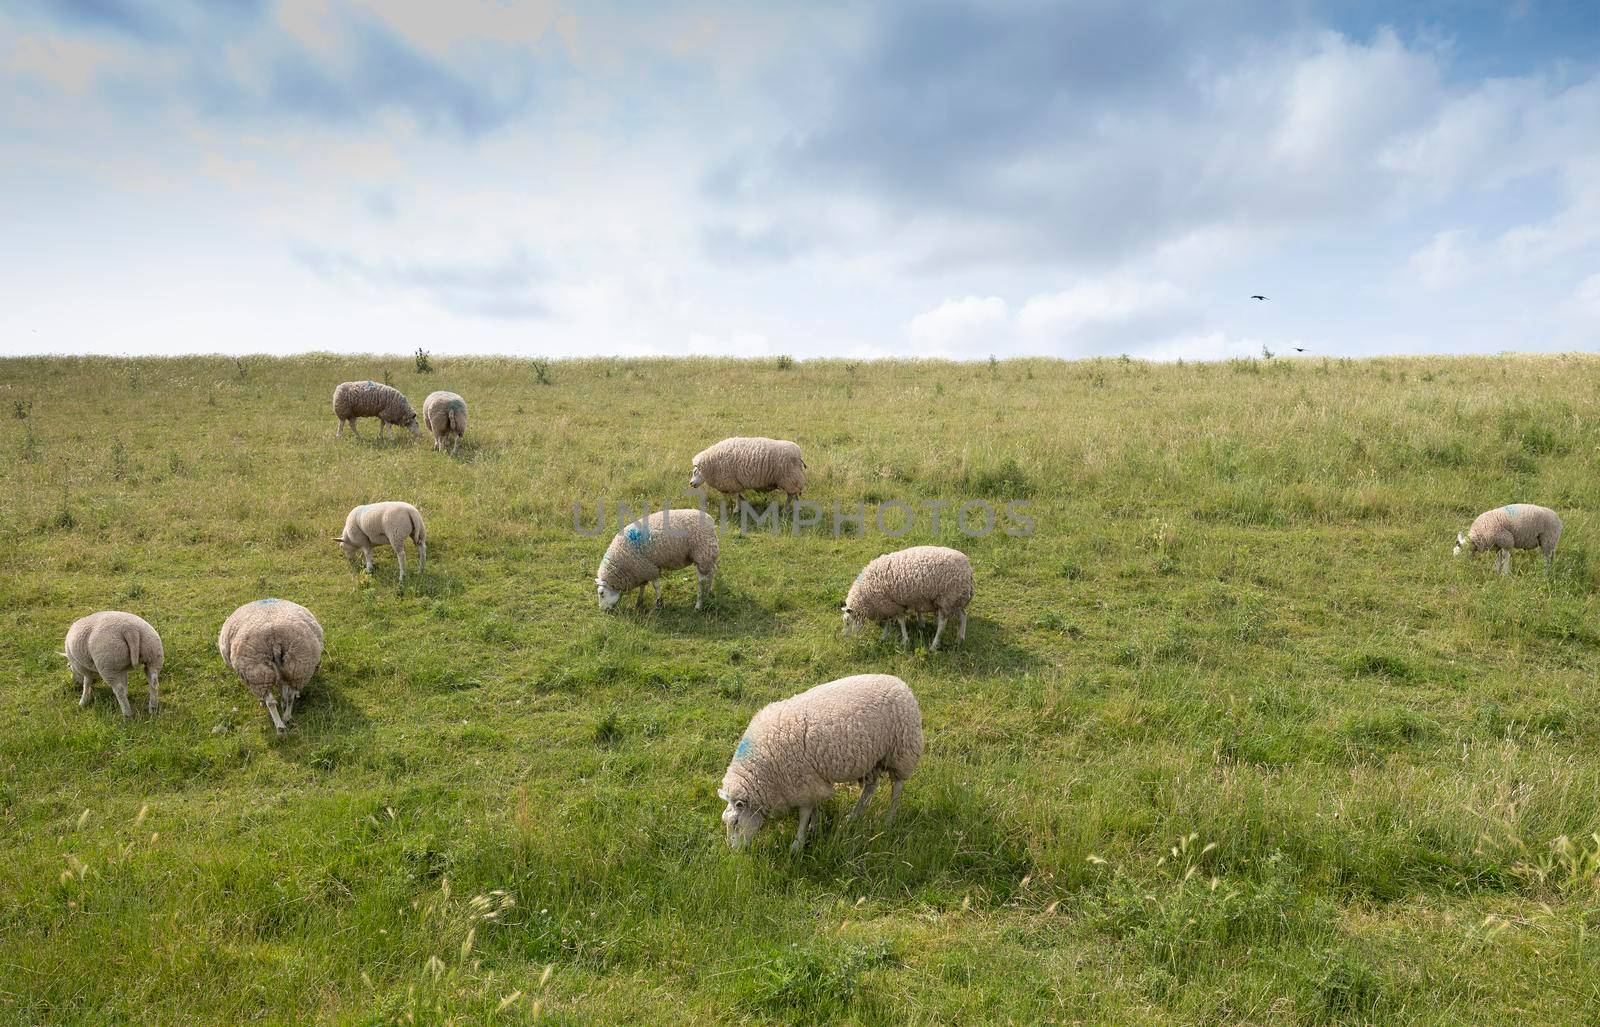 sheep on grass dike under blue sky in the netherlands by ahavelaar